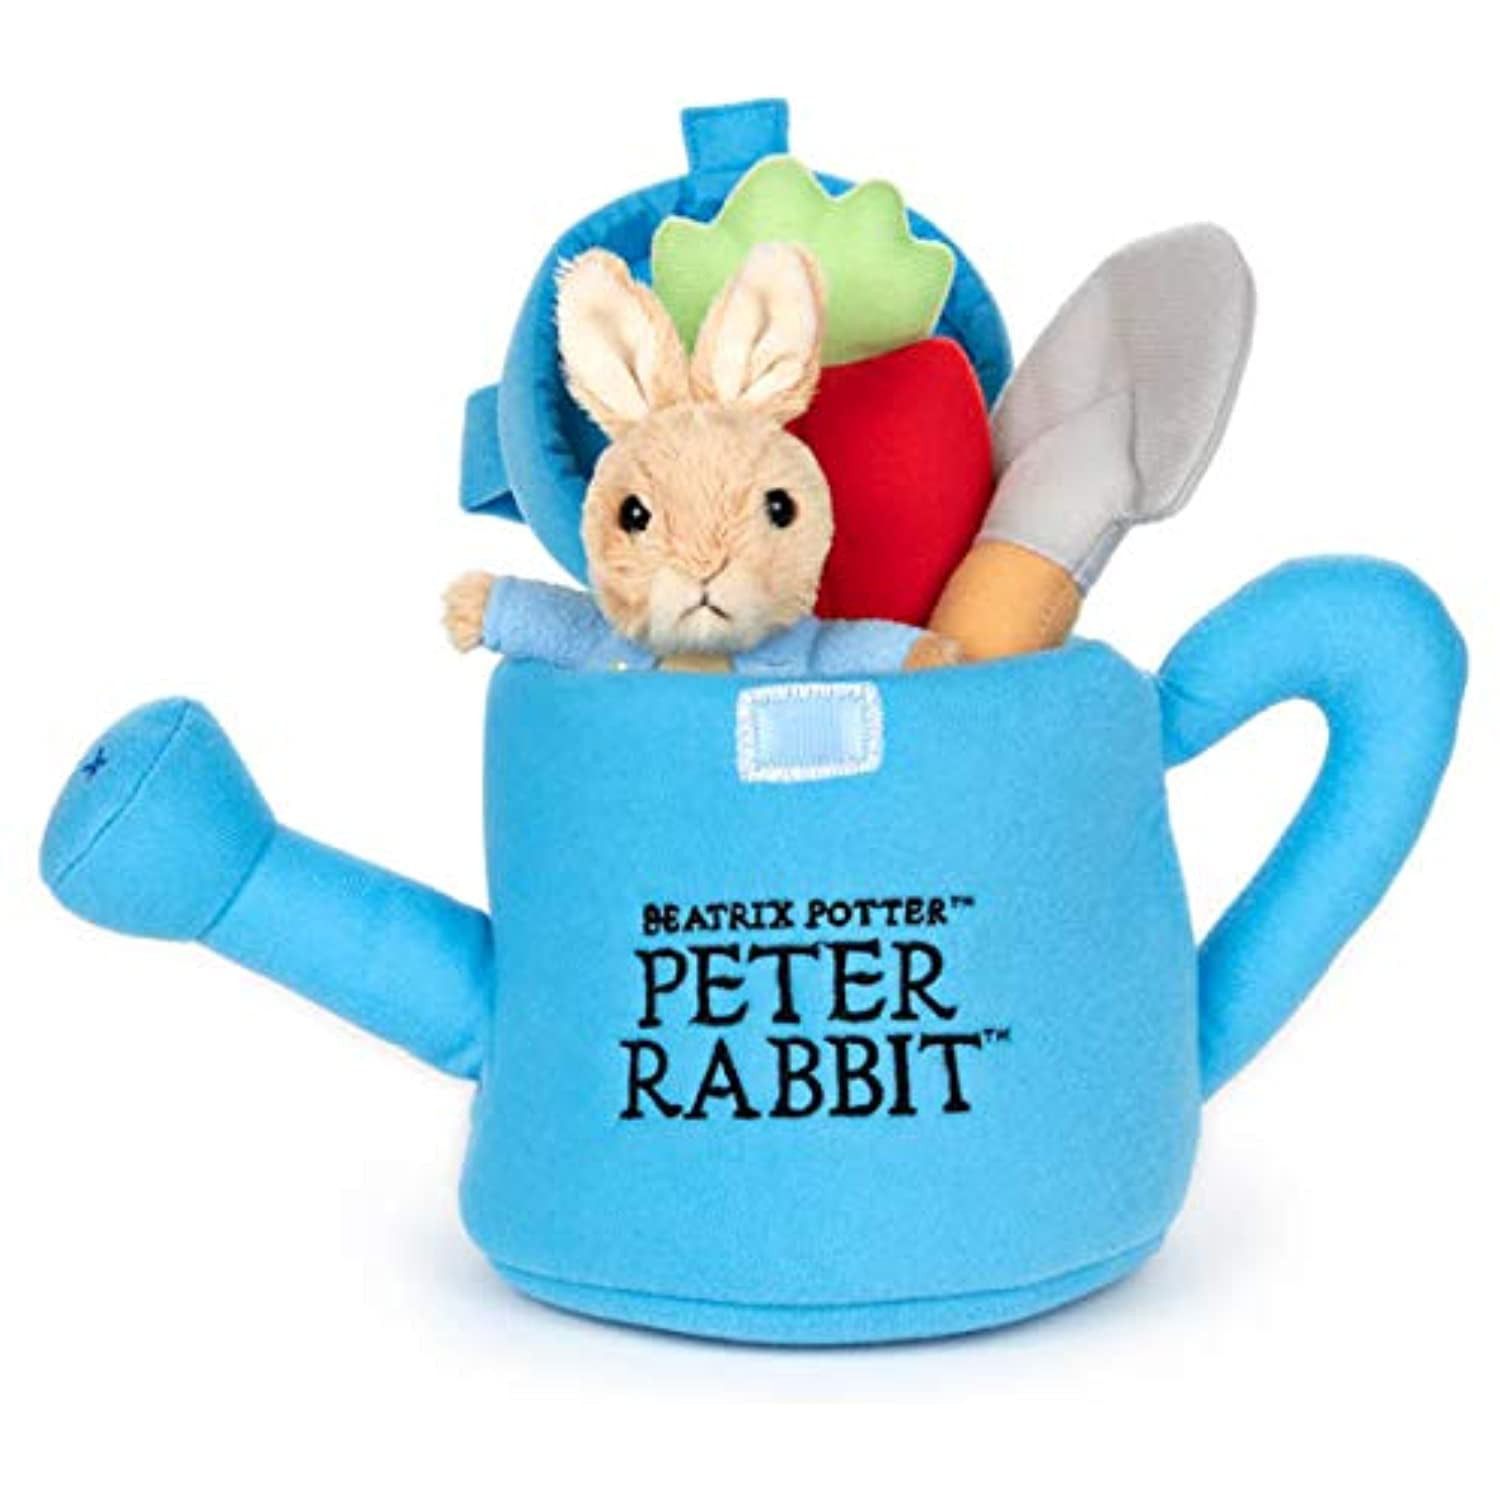 GUND Beatrix Potter Peter Rabbit Medium Plush Soft Toy 6053528 for sale online 